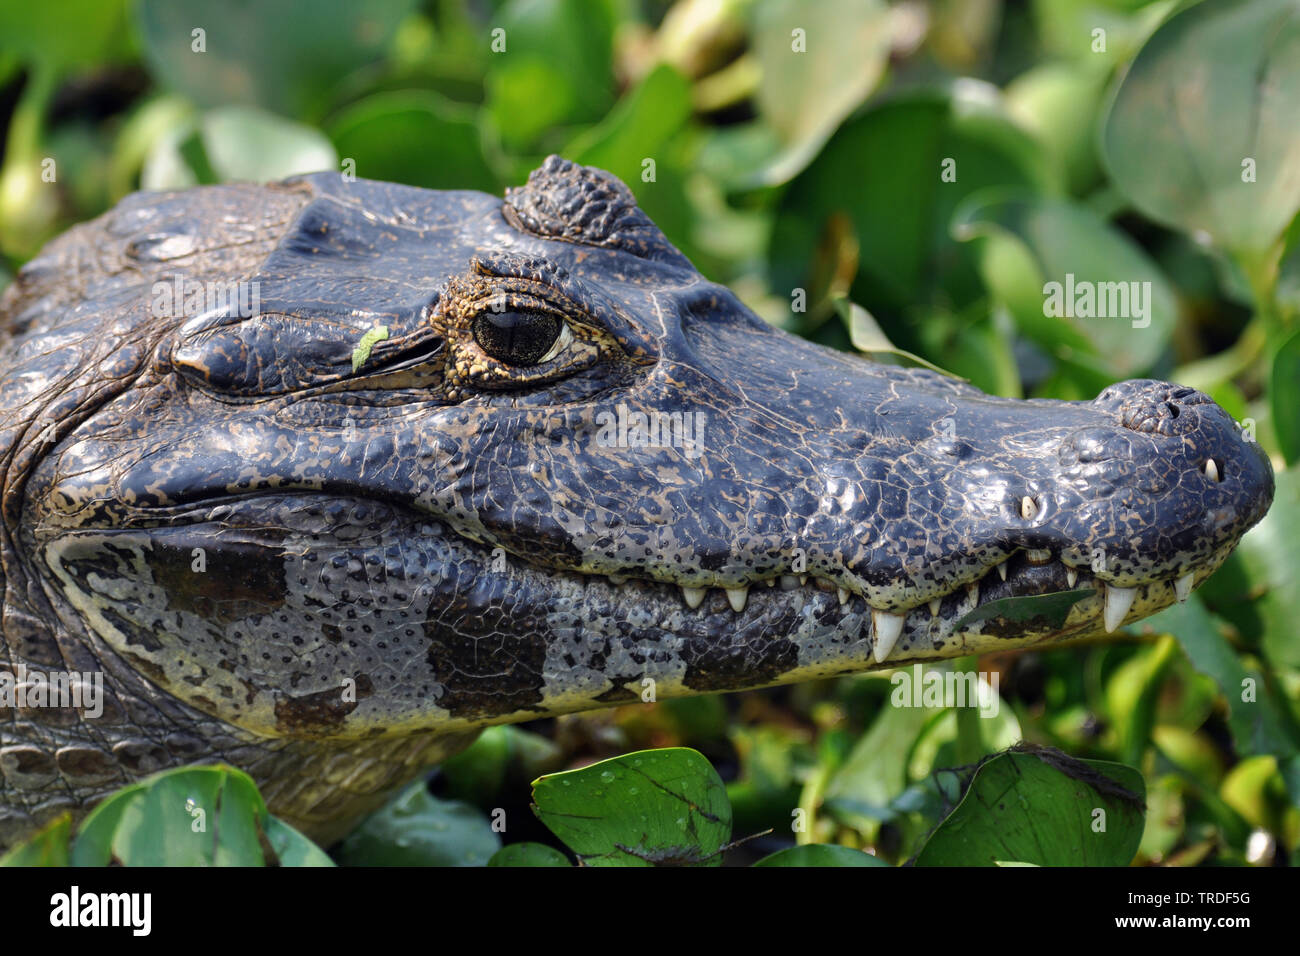 Caimano dagli occhiali (Caiman crocodilus), ritratto, Brasile, Pantanal Foto Stock